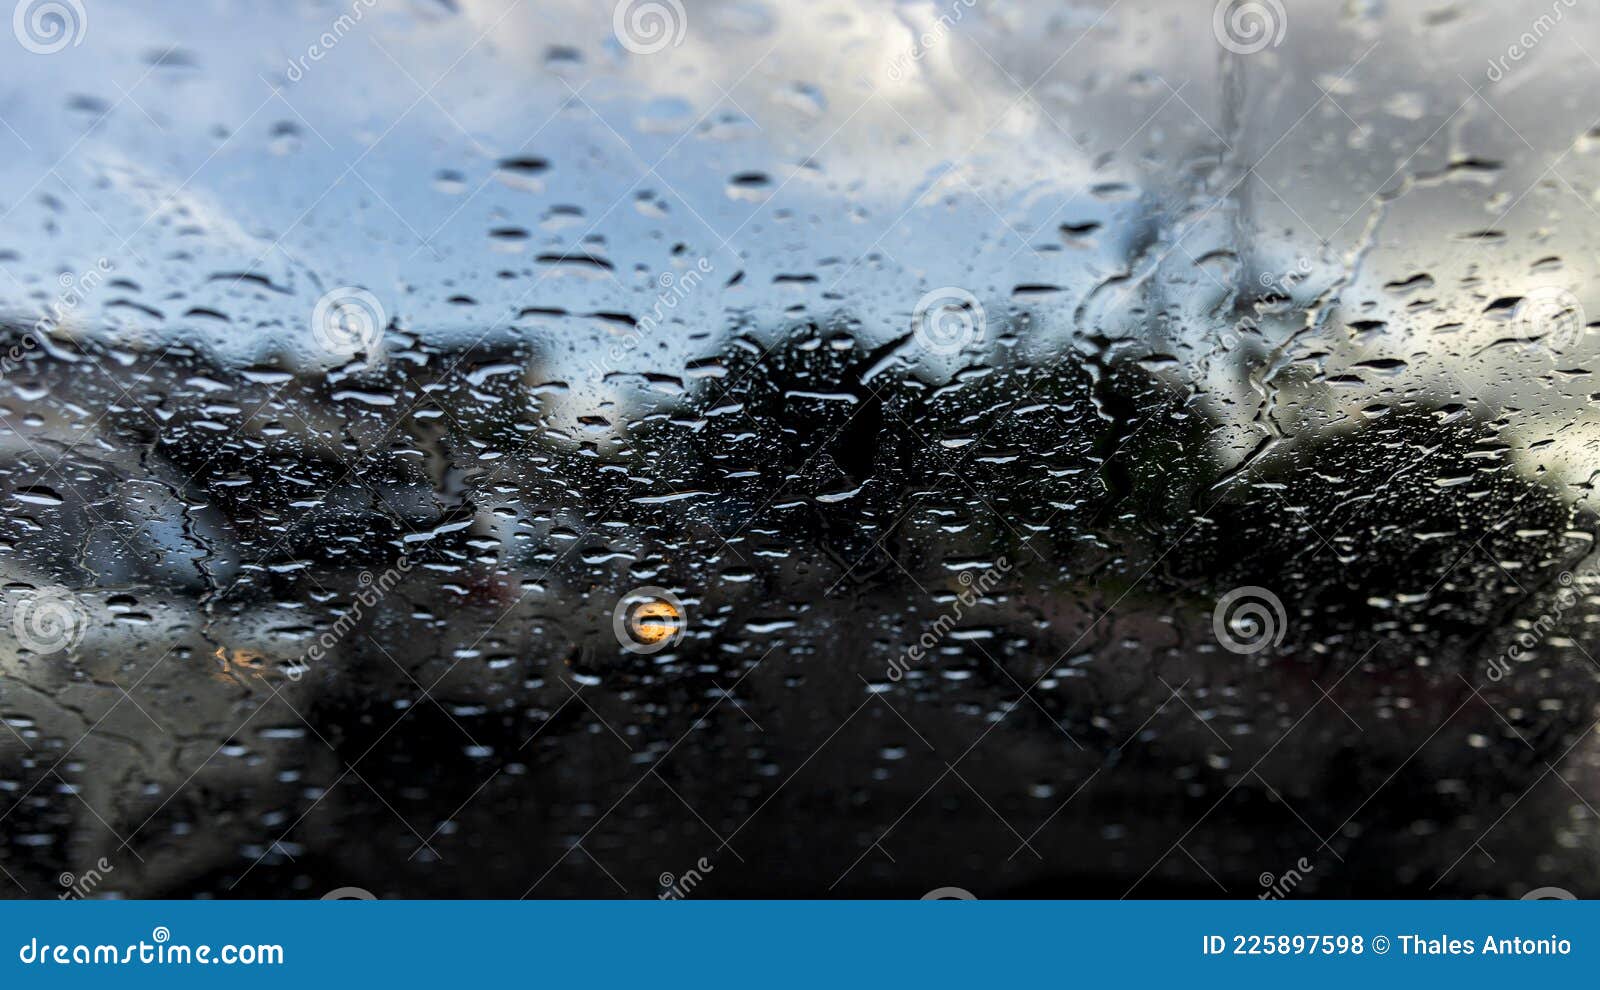 bokeh, rain, water drops. rainy day. car flashlights defocused